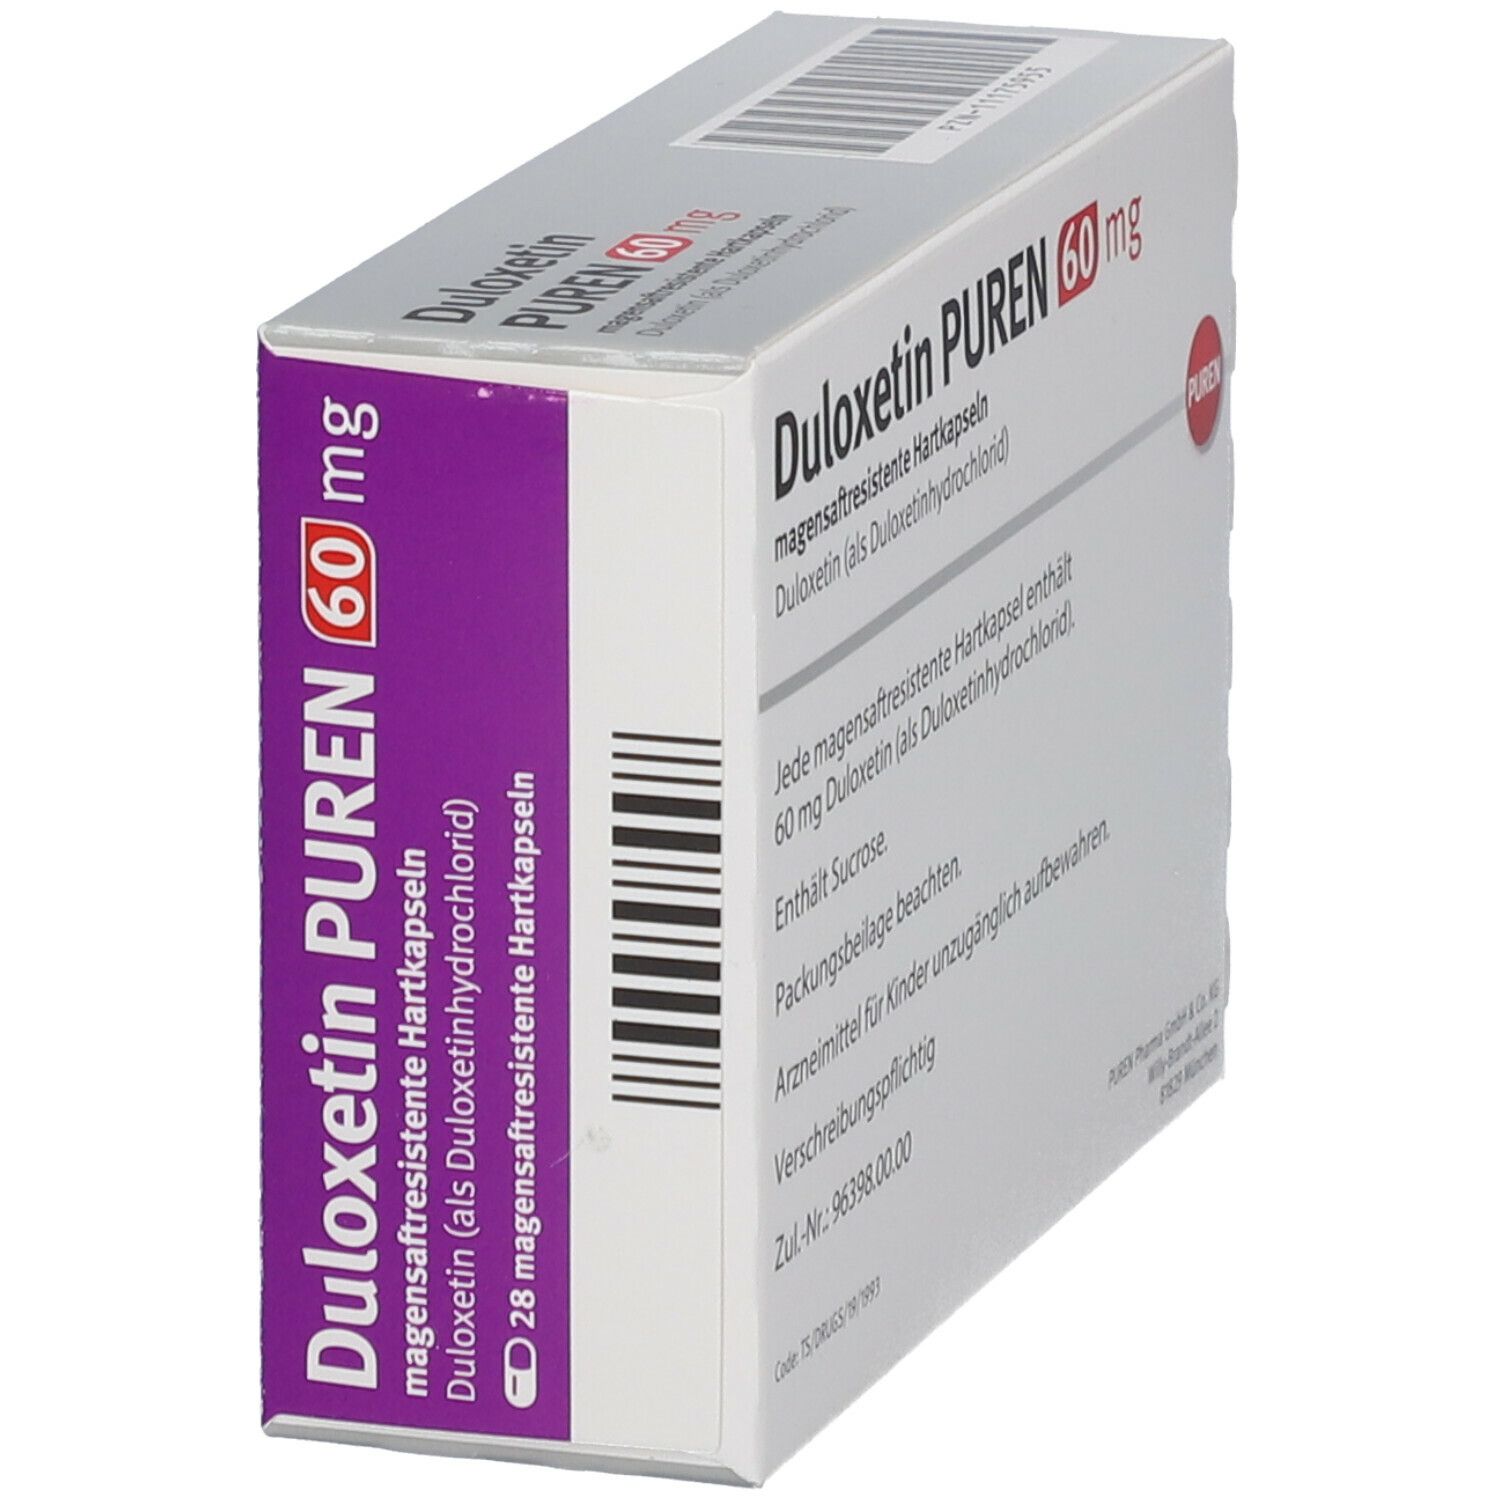 Duloxetin PUREN 60 mg